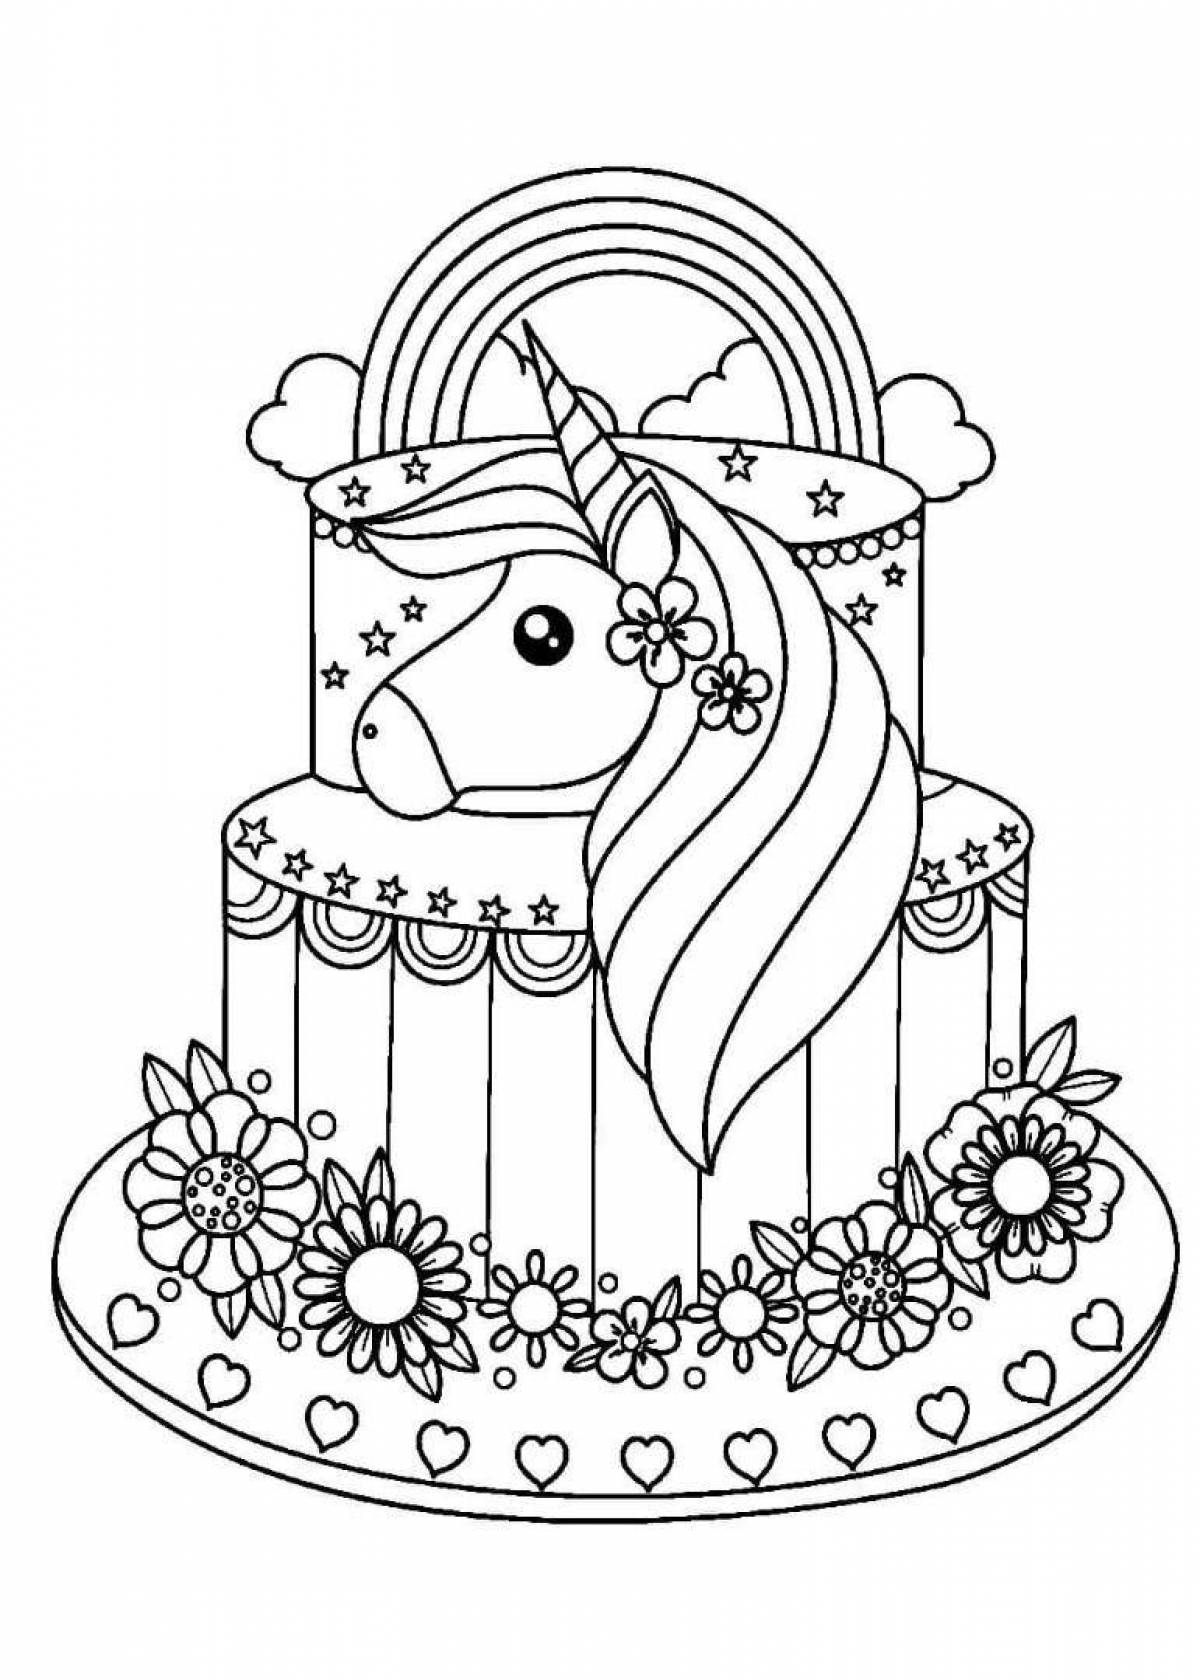 Happy unicorn cake coloring book